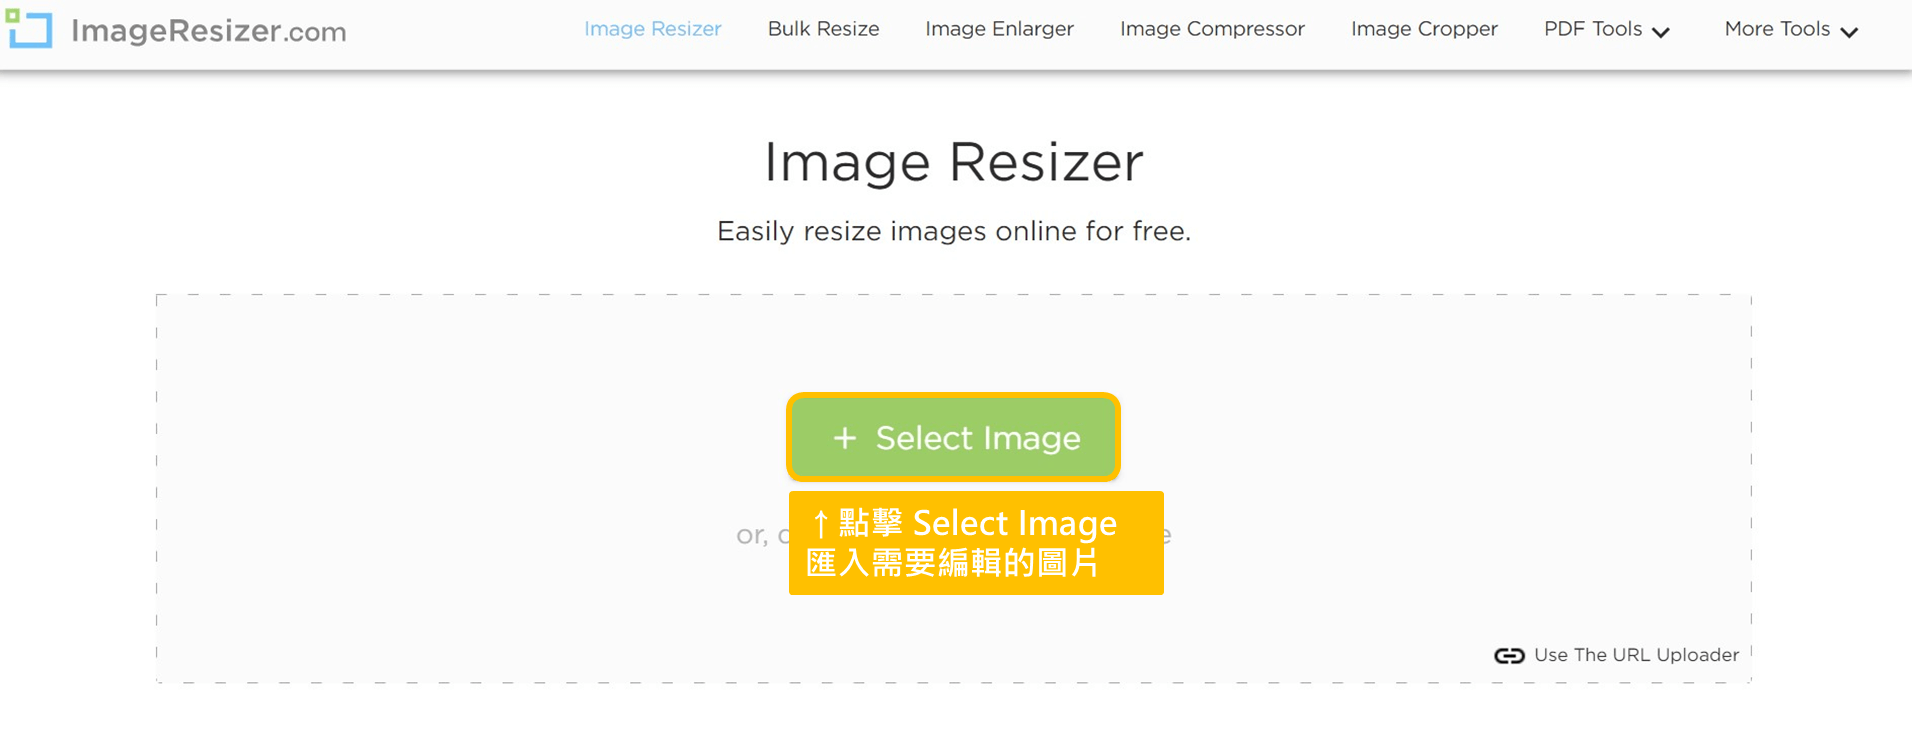 鵠學苑｜ImageResizer 圖片編輯器 Image Resizer 第一步